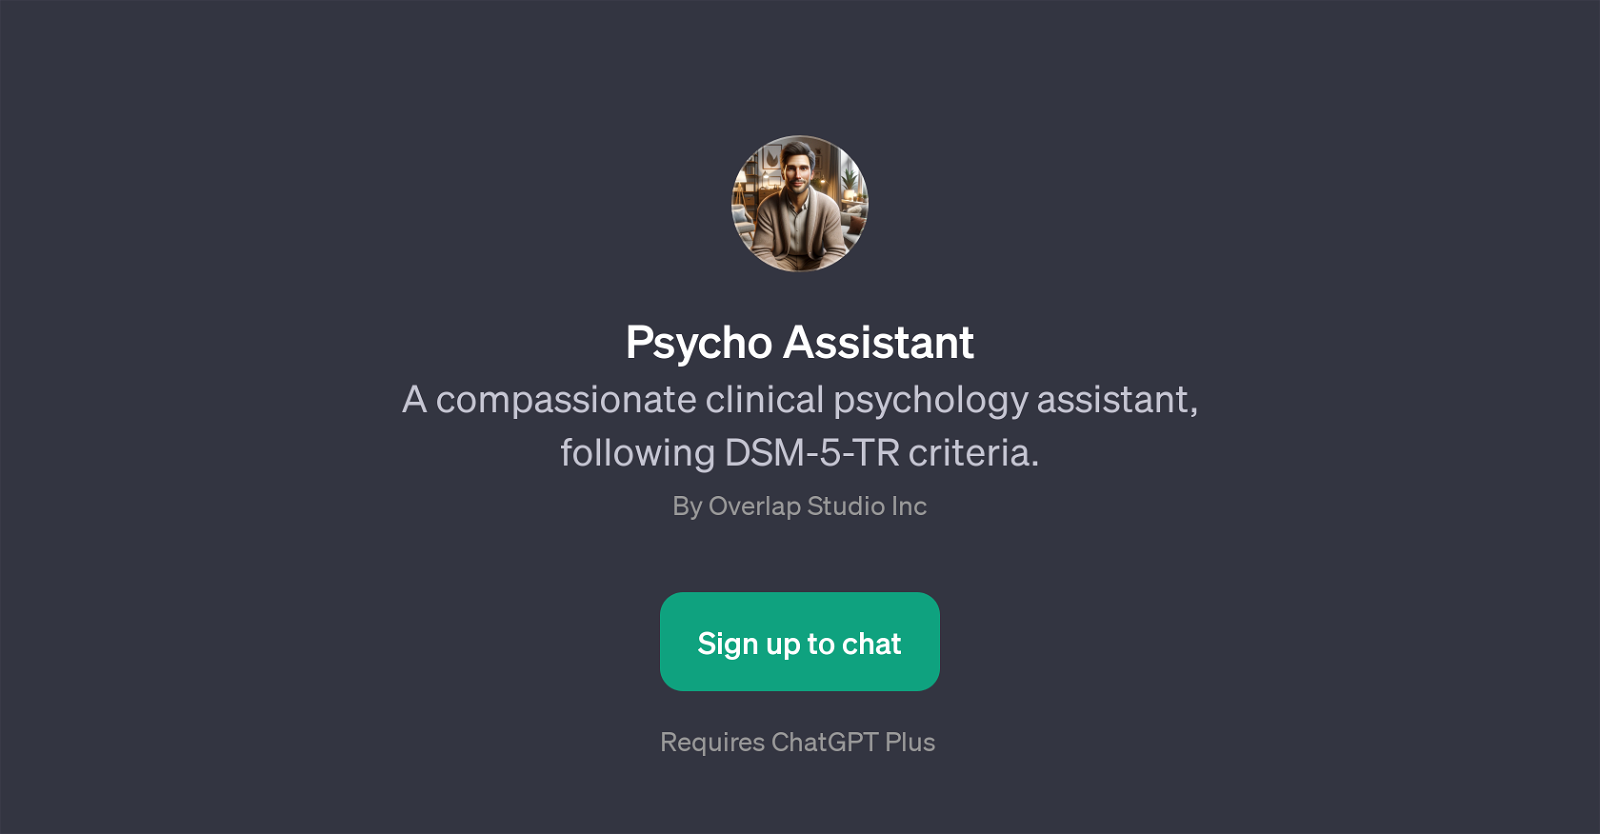 Psycho Assistant website